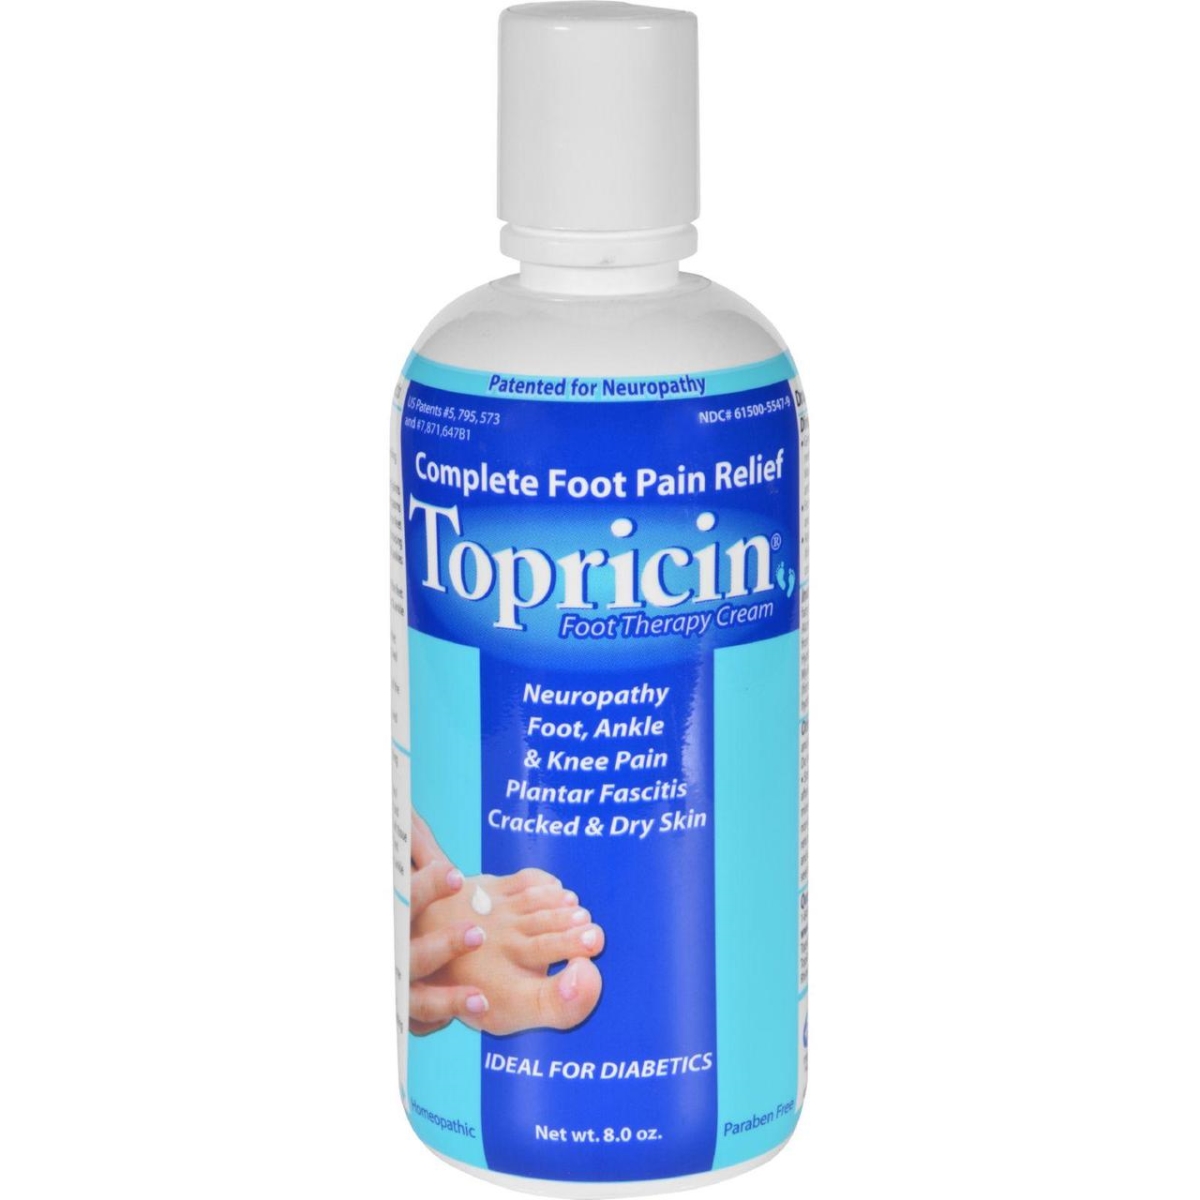 Hg0850529 8 Oz Foot Therapy Cream